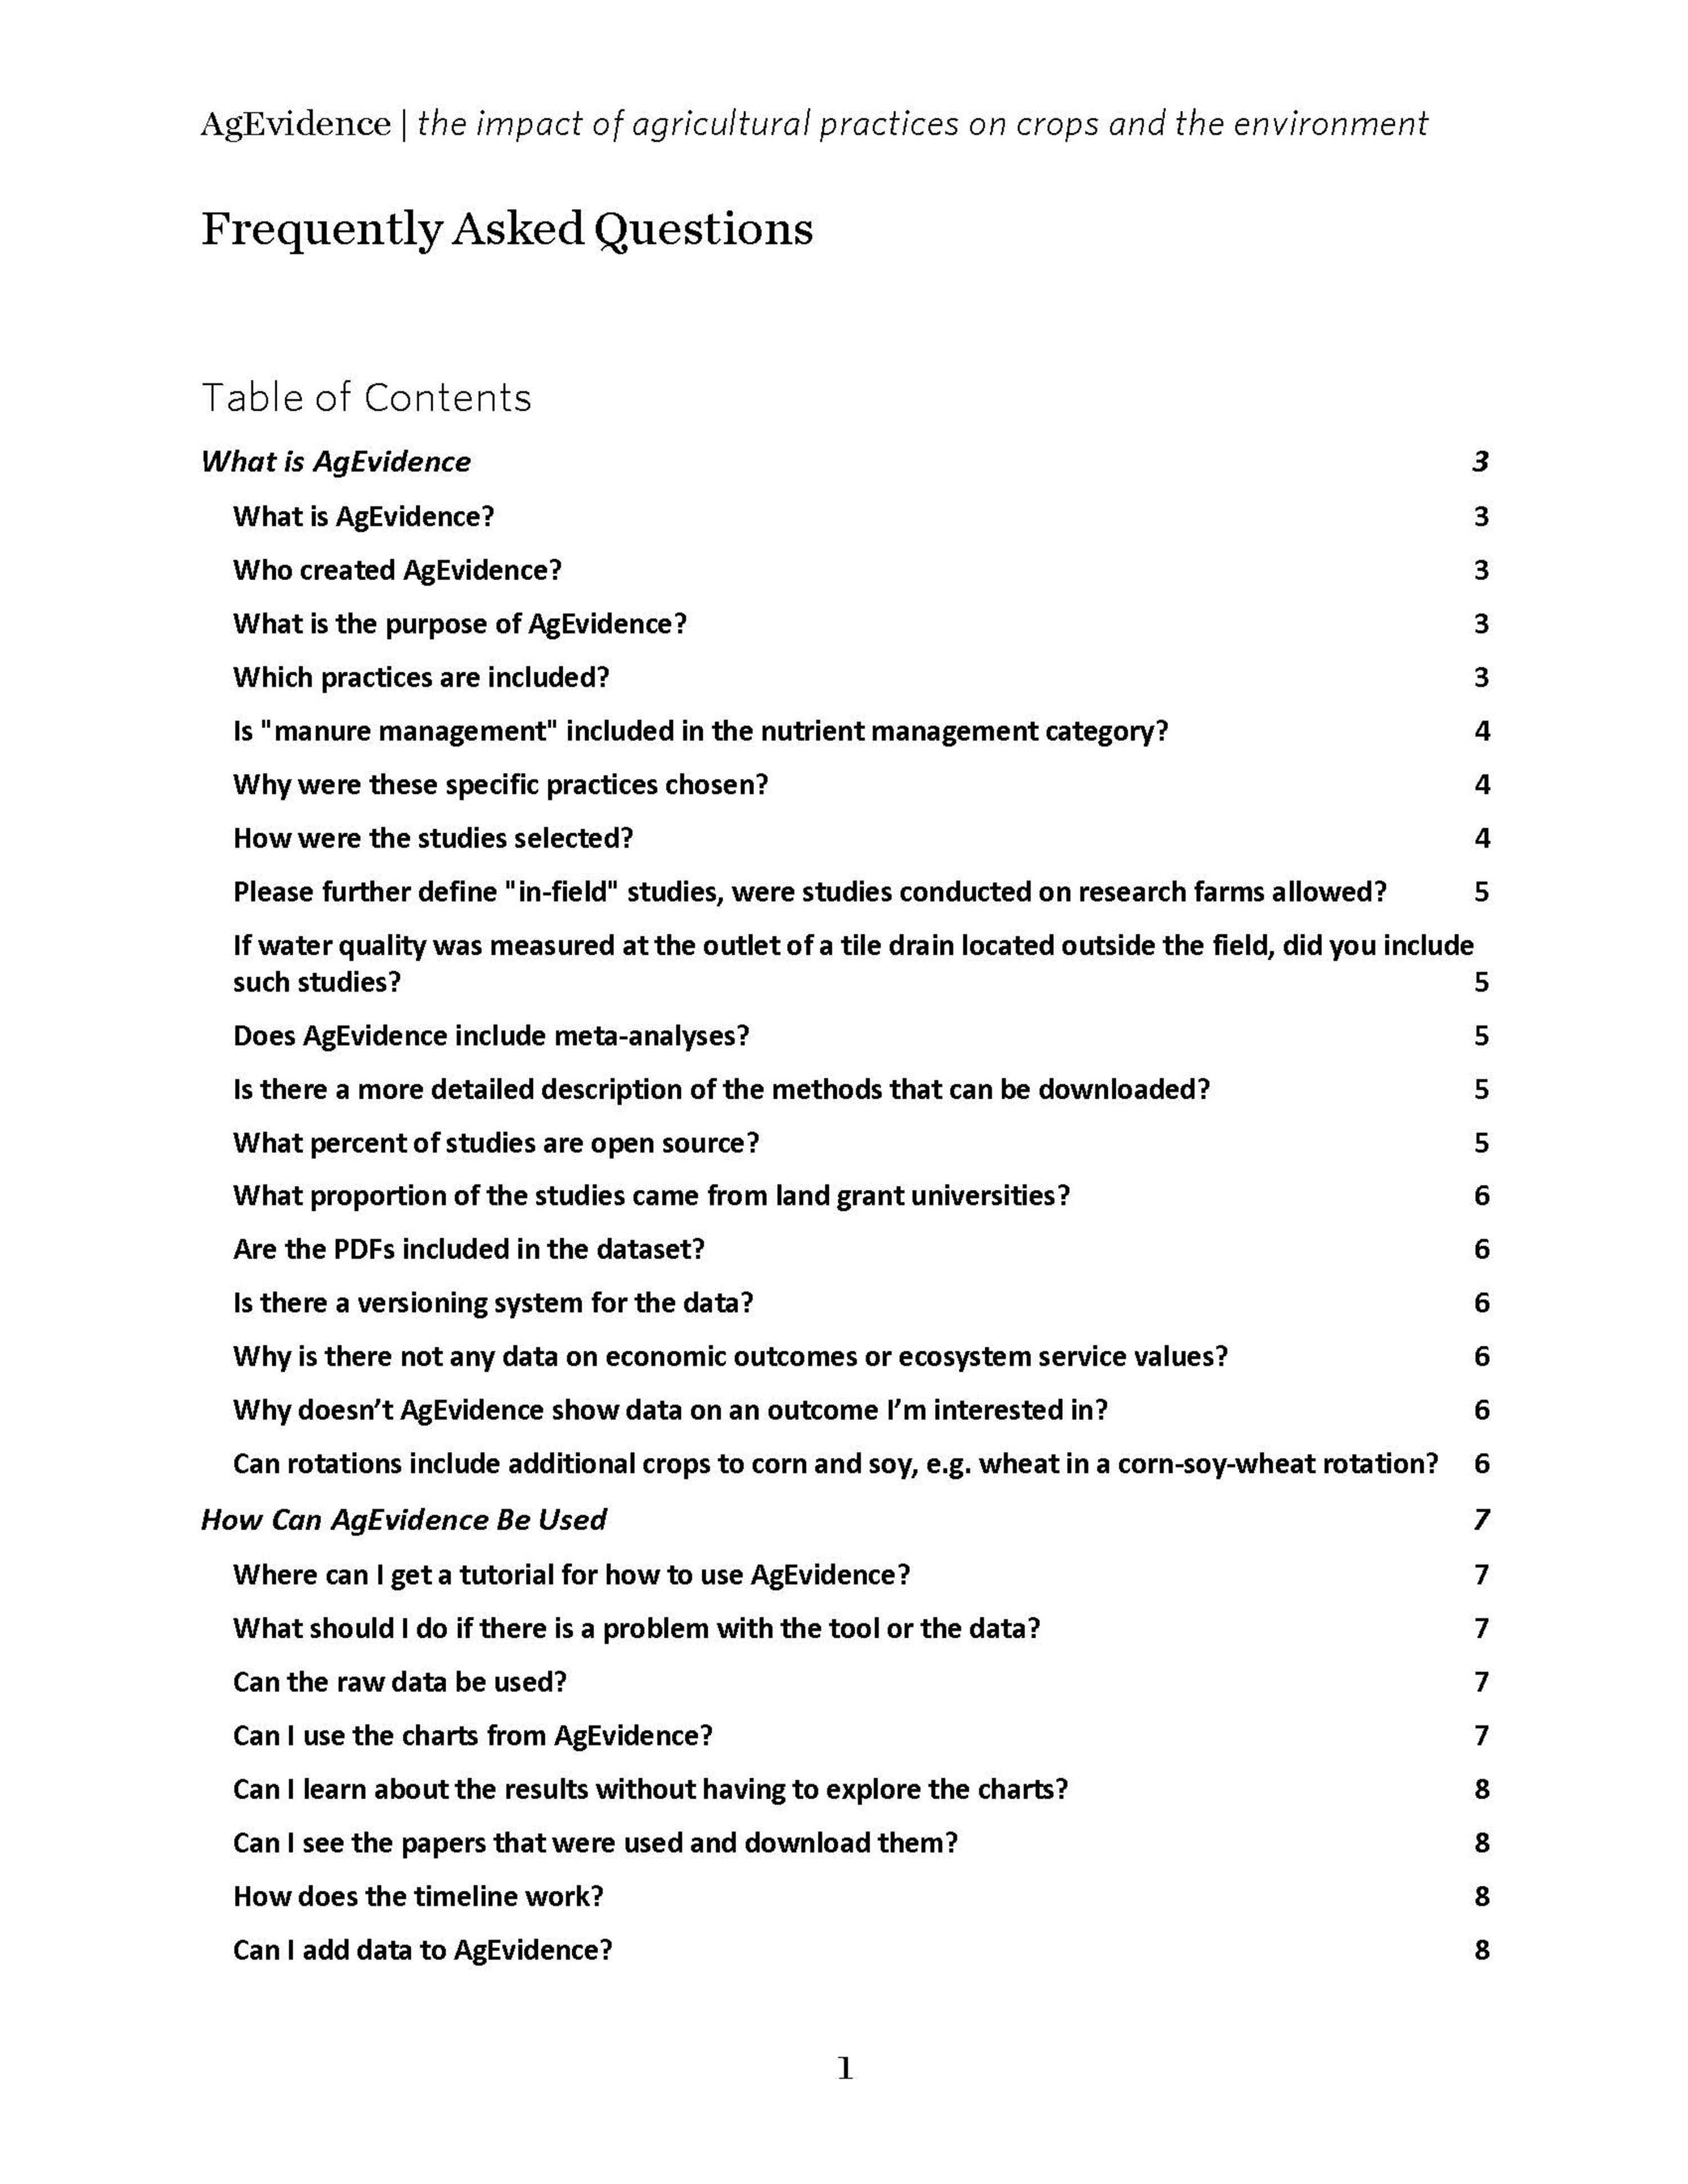 Cover of AgEvidence FAQ document.